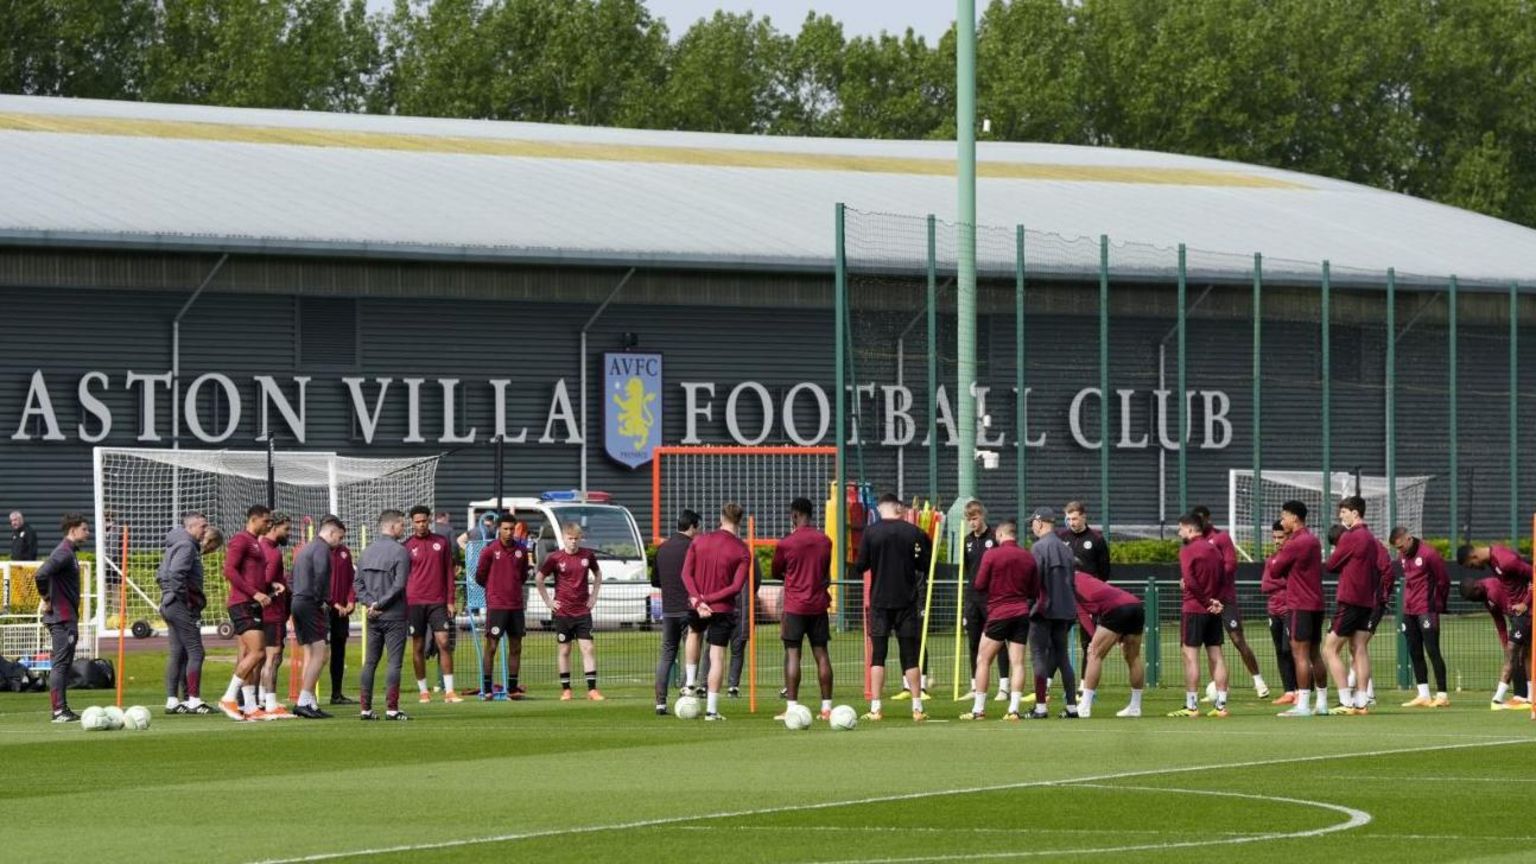 Aston Villa staff and players